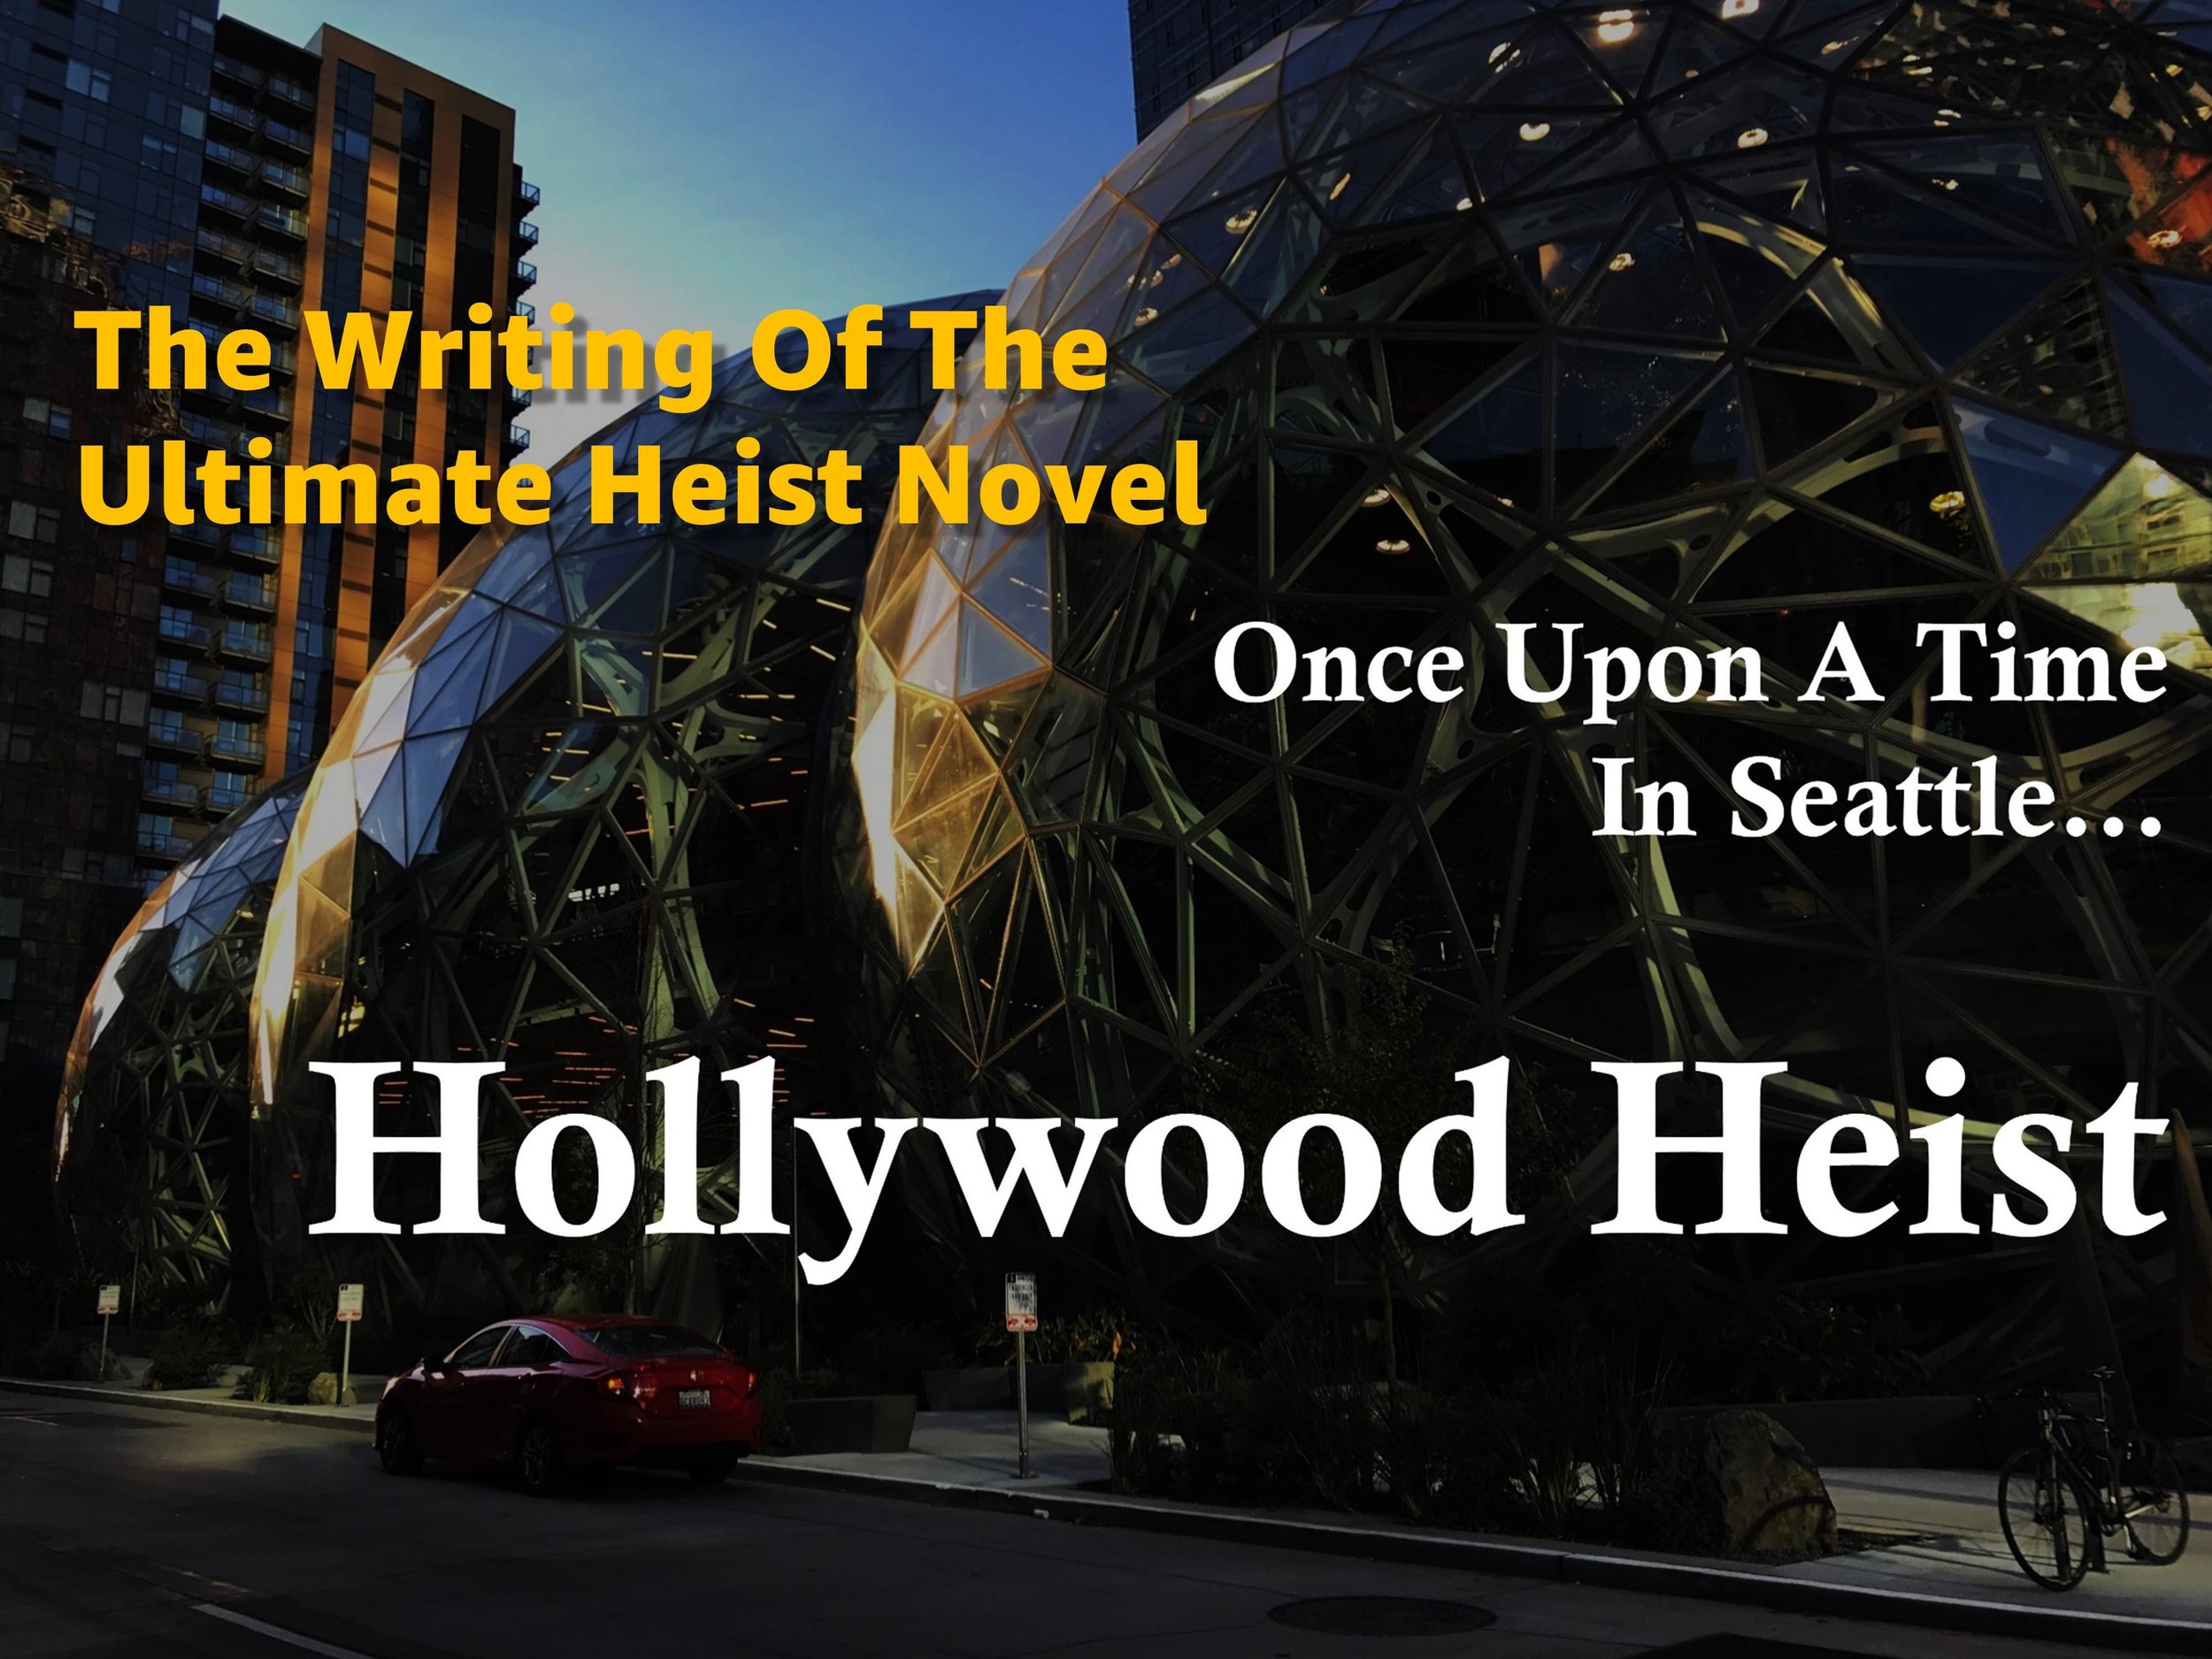 Hollywood Heist_the writing of.jpg